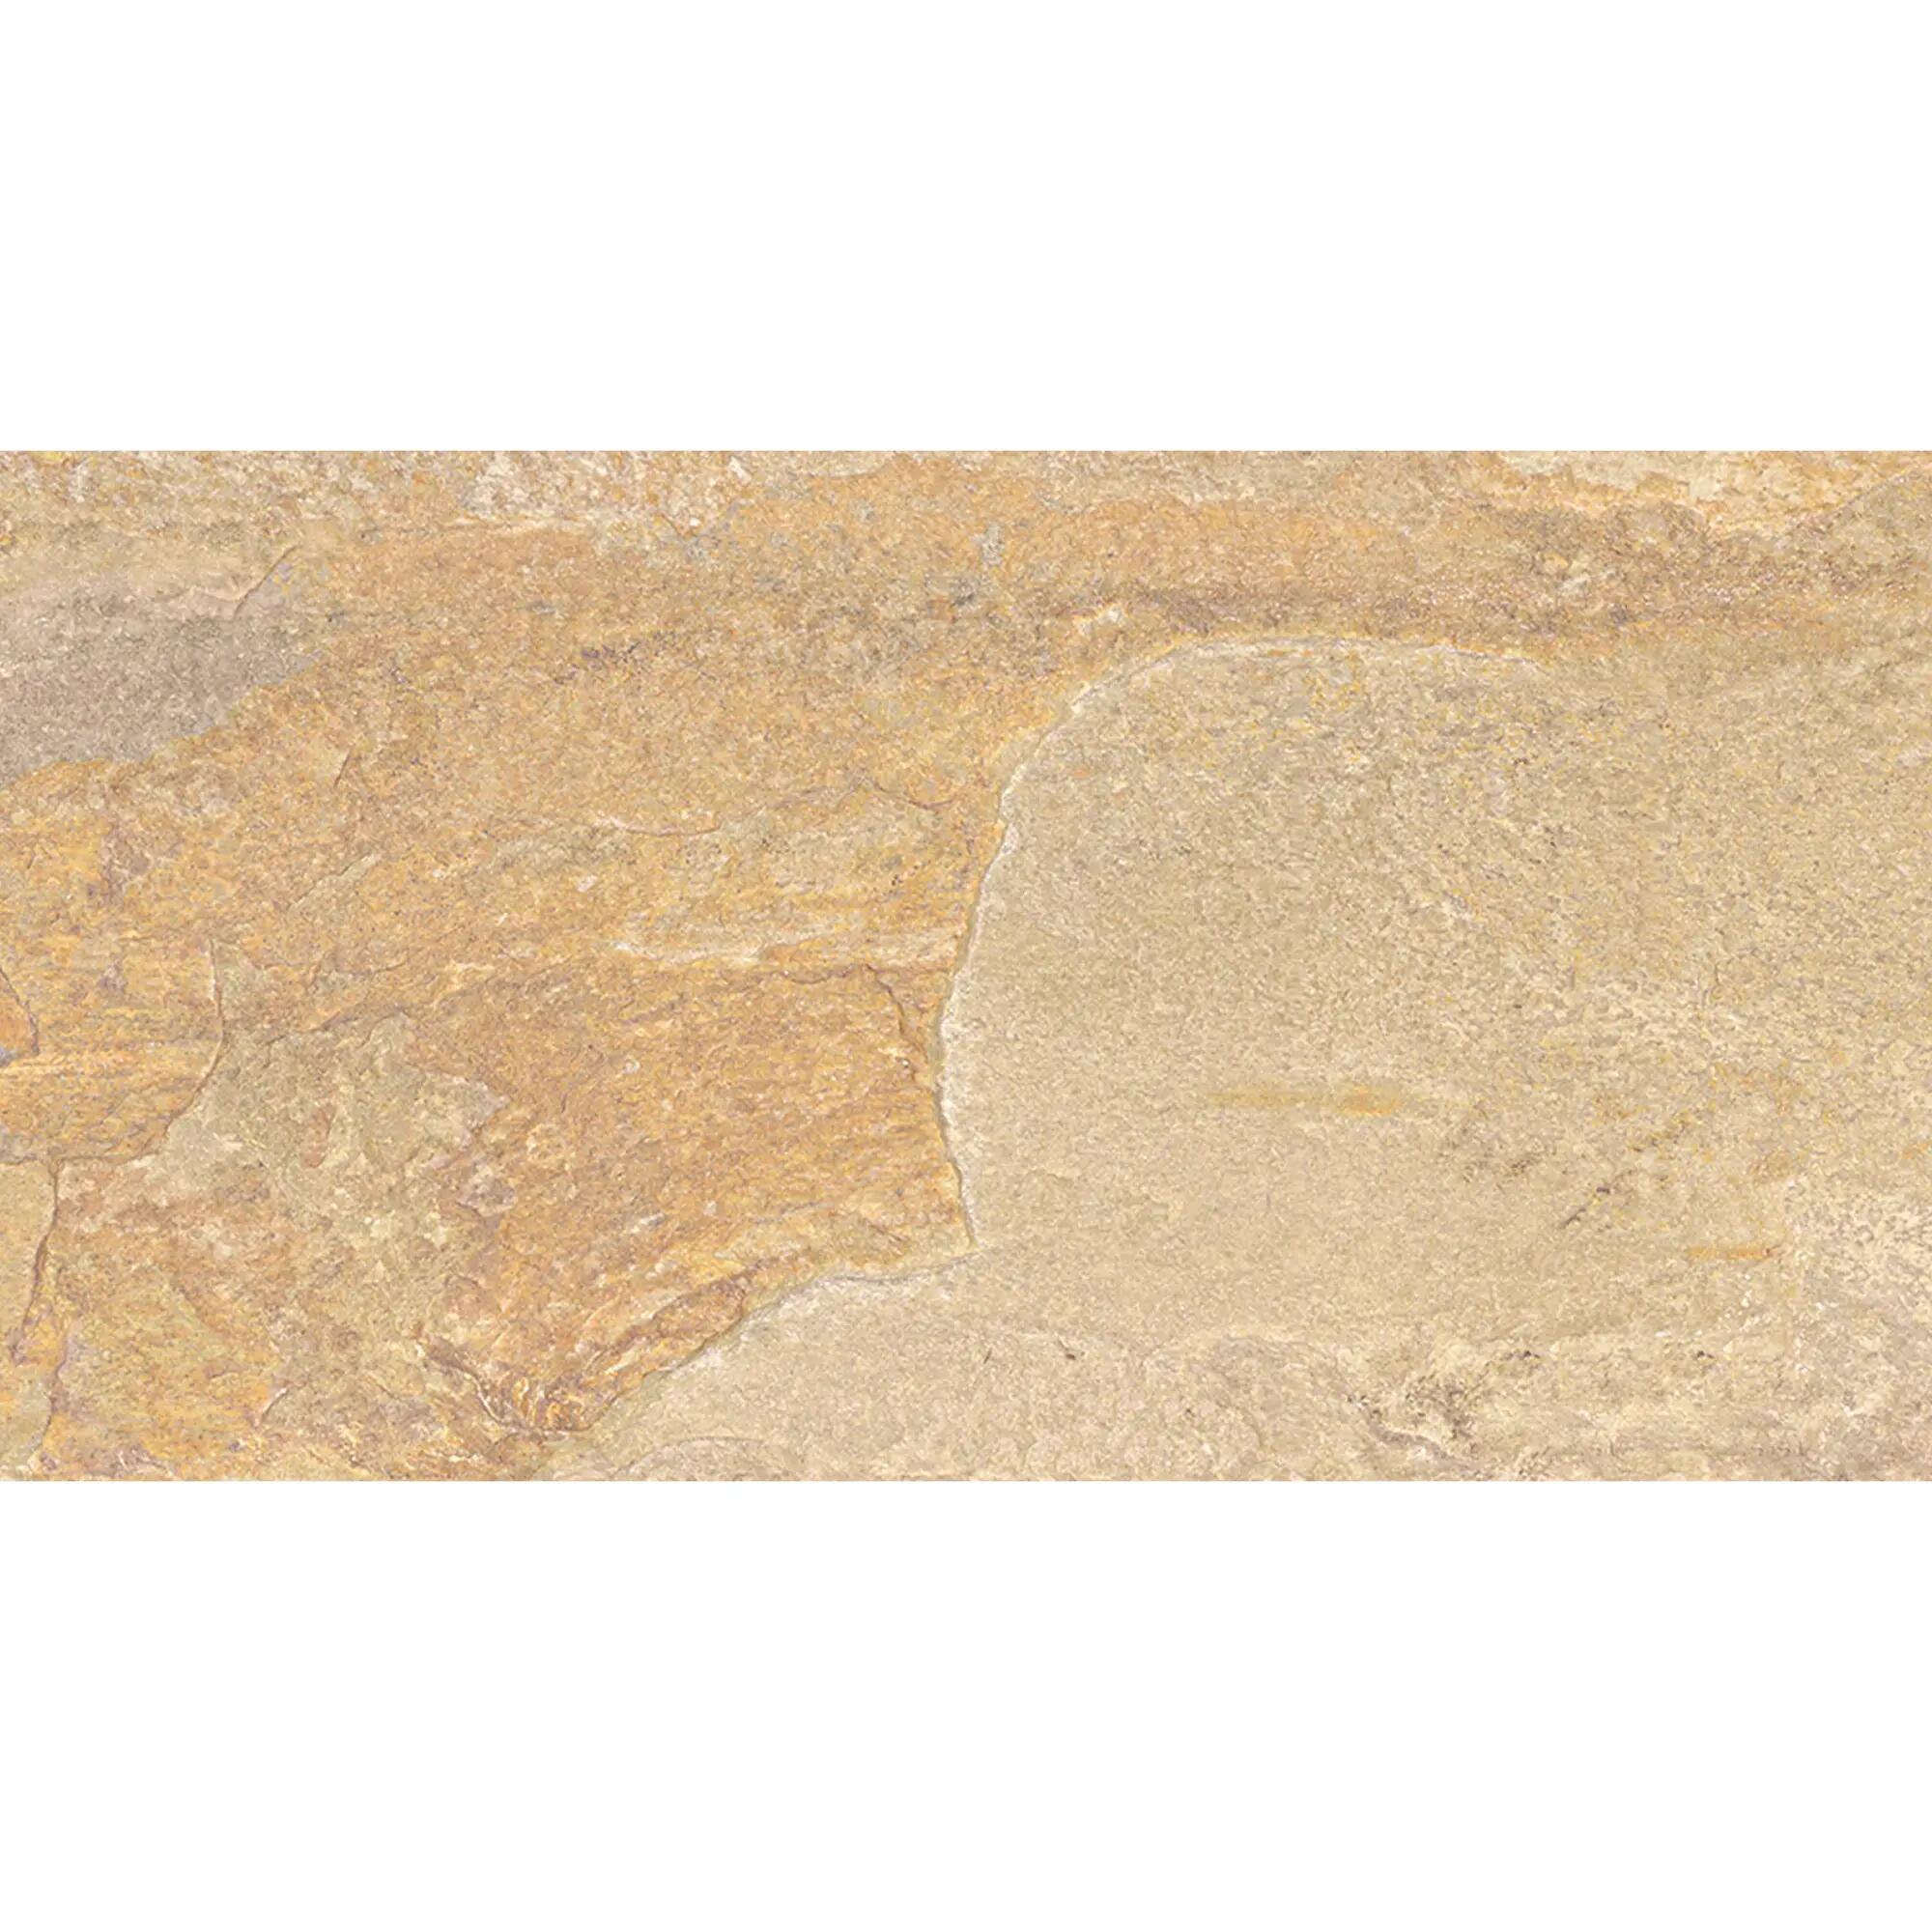 Piastrella da pavimento Slate 31 x 62 cm sp. 9 mm PEI 4/5 beige - 2